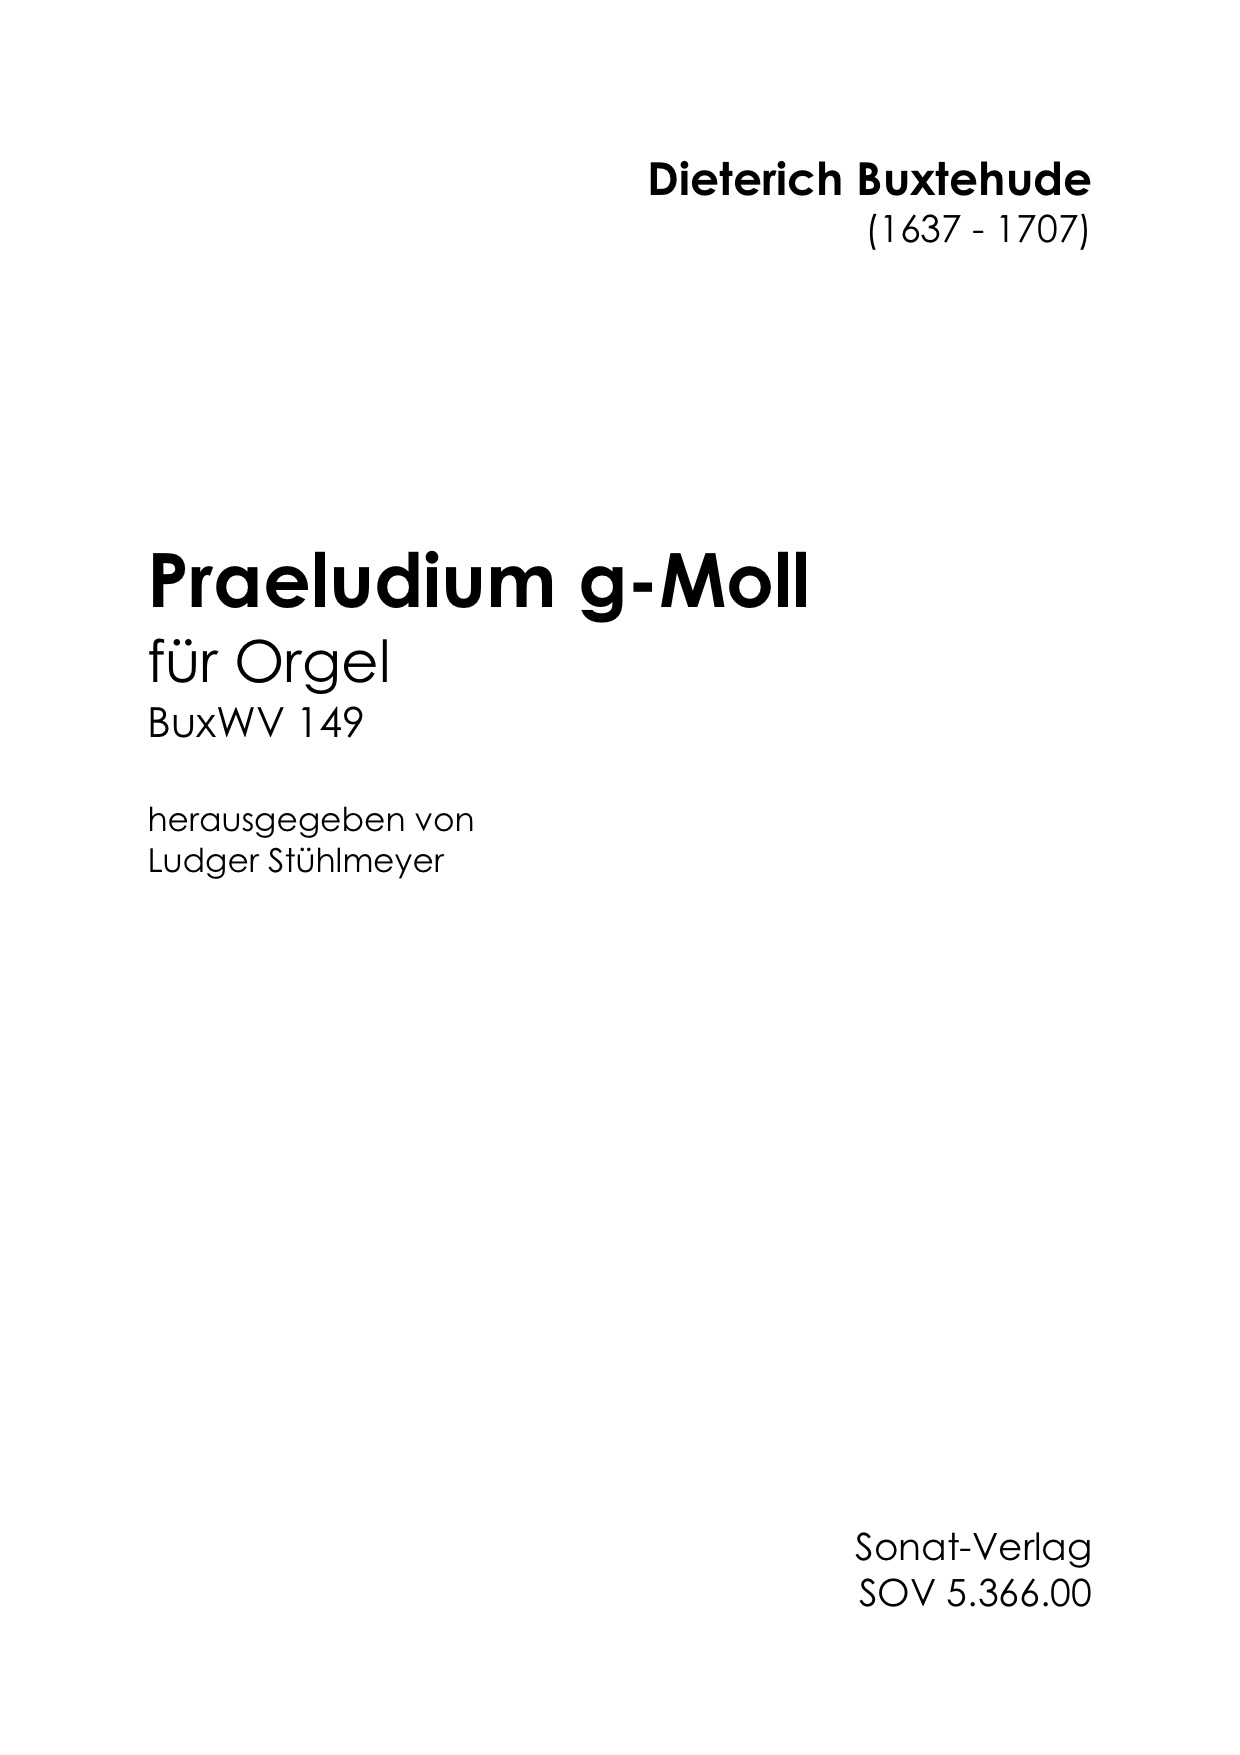 Praeludium g-Moll, BuxWV 149